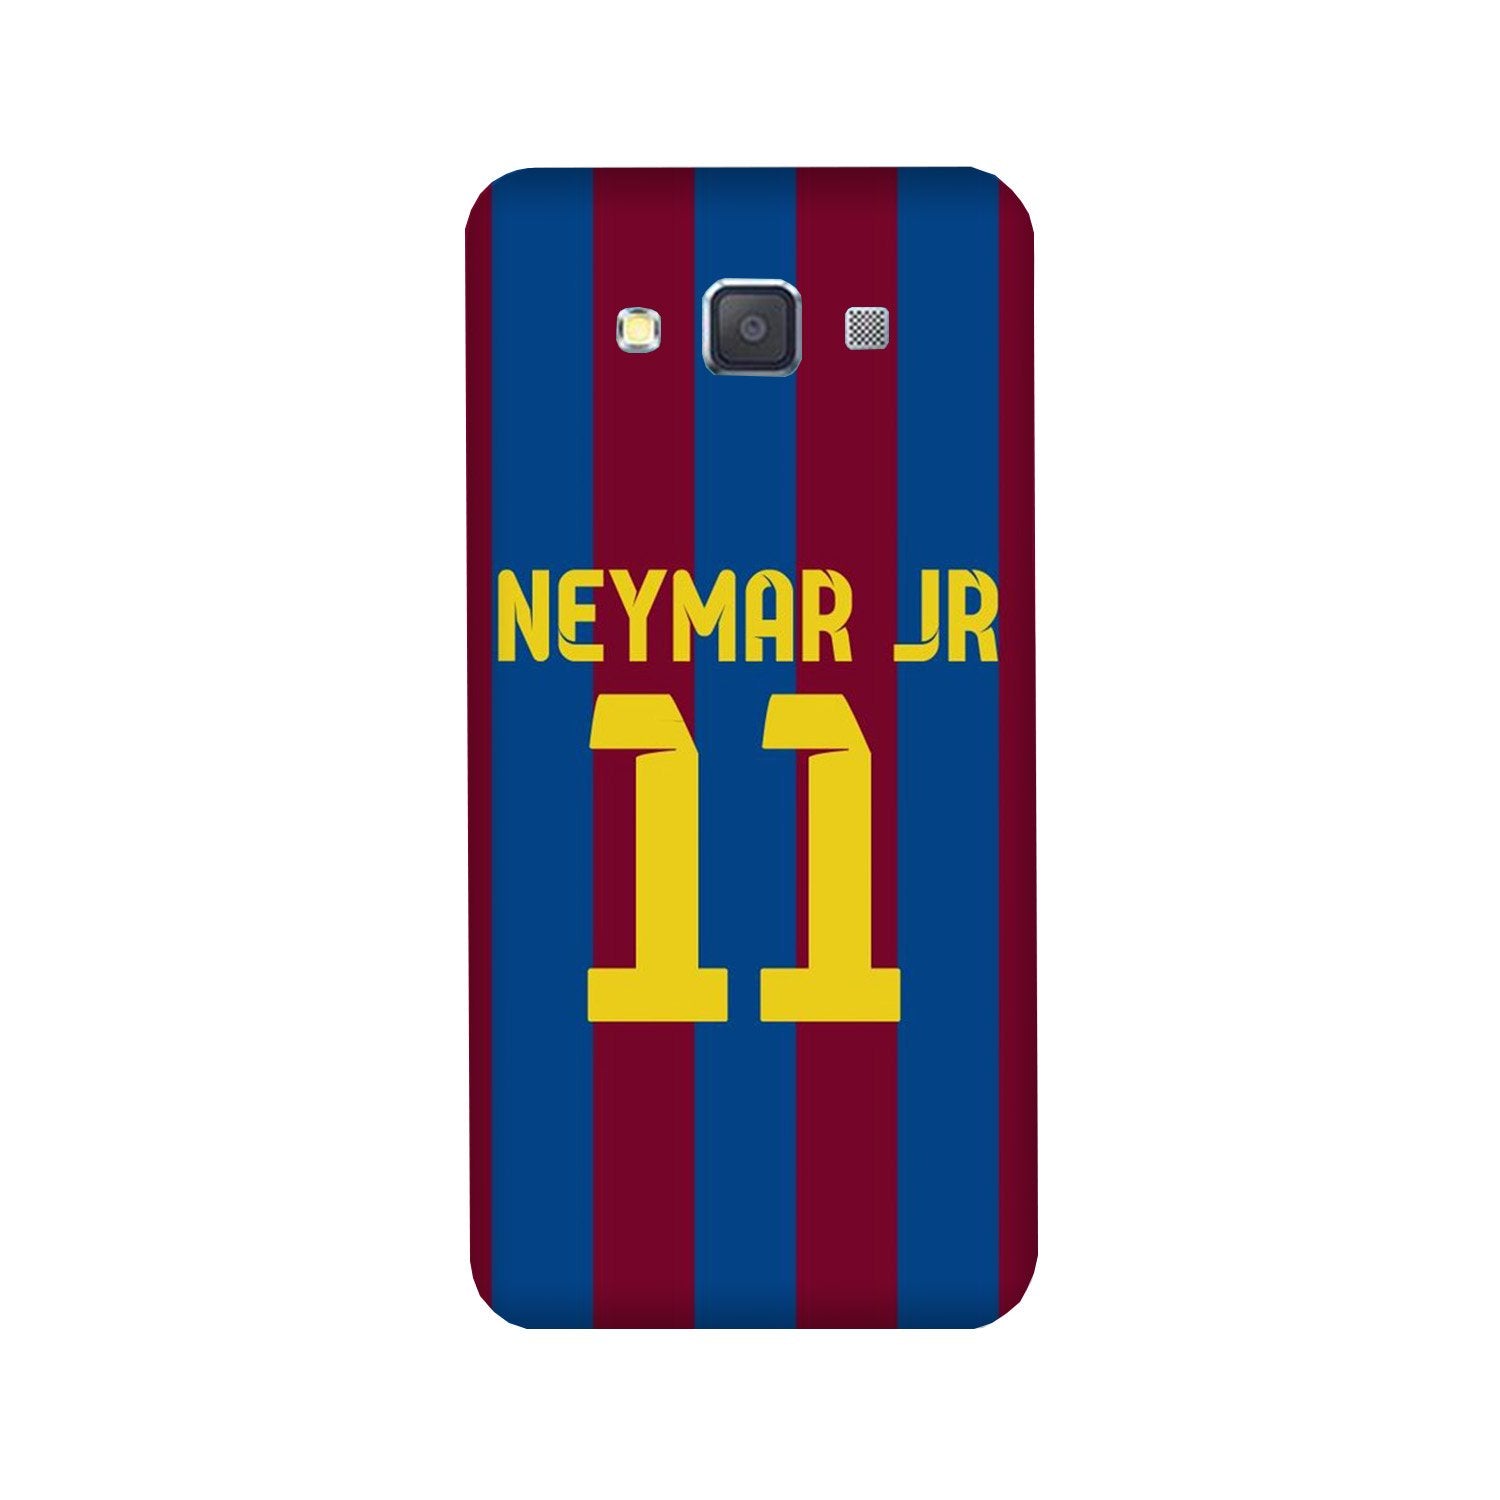 Neymar Jr Case for Galaxy Grand Prime(Design - 162)